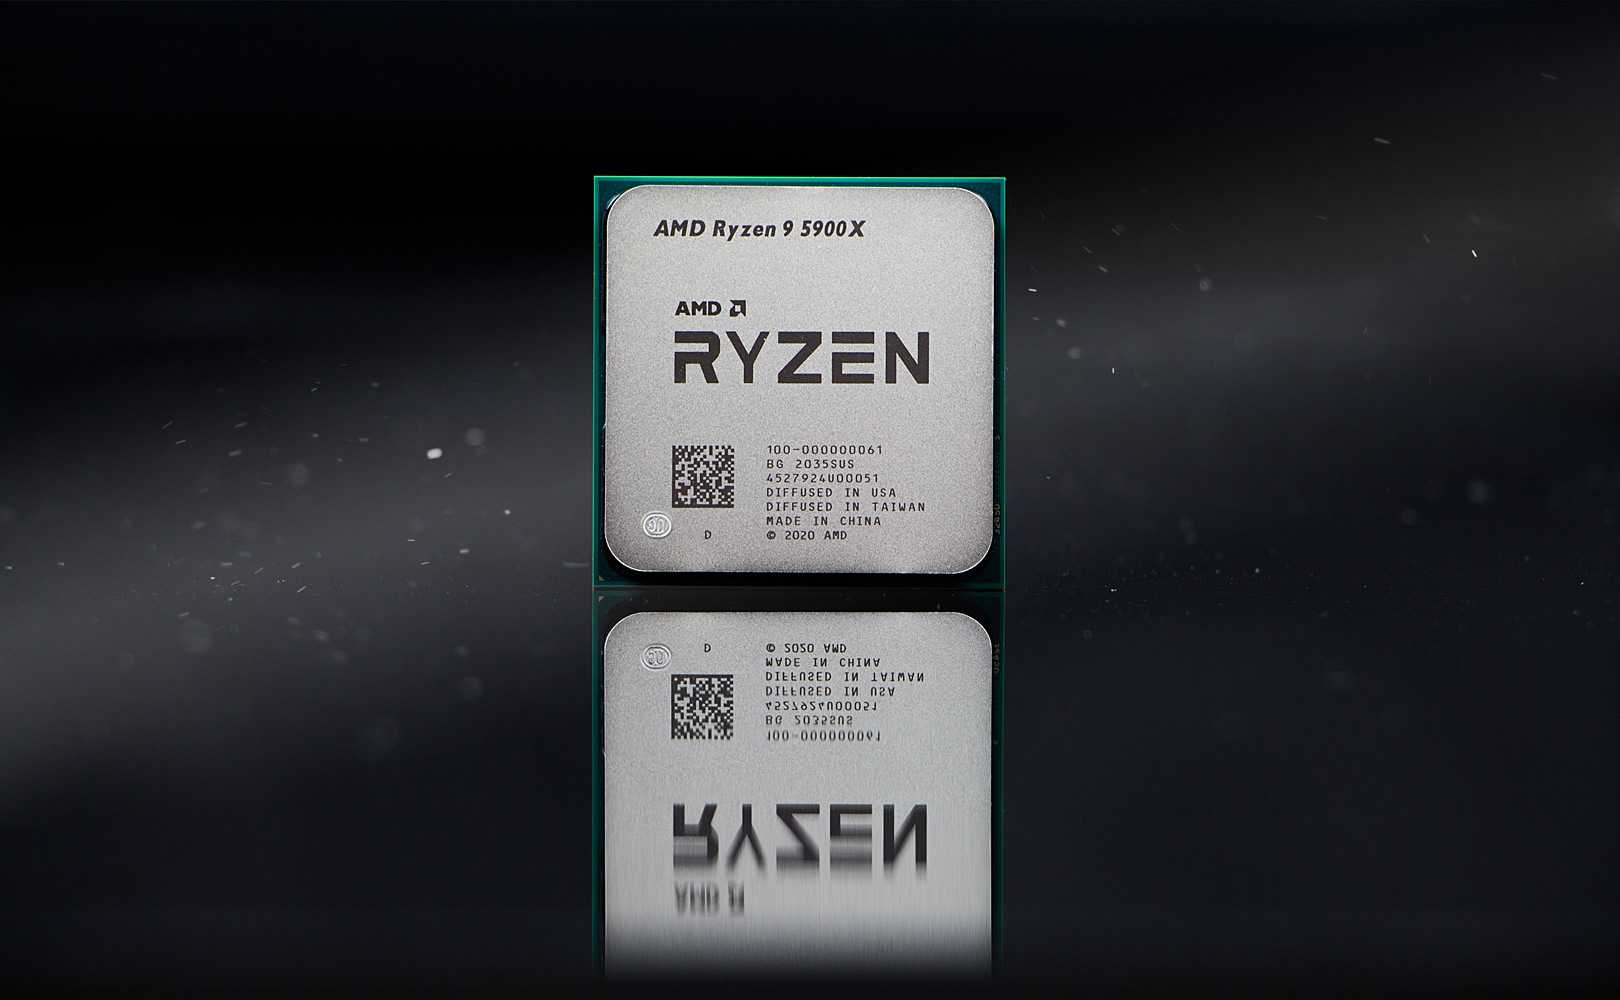 Купить процессор ryzen 9. R9 5900x. AMD 9 5900x. Ryzen 9 5900x. Процессор CPU AMD Ryzen 9 5900x.